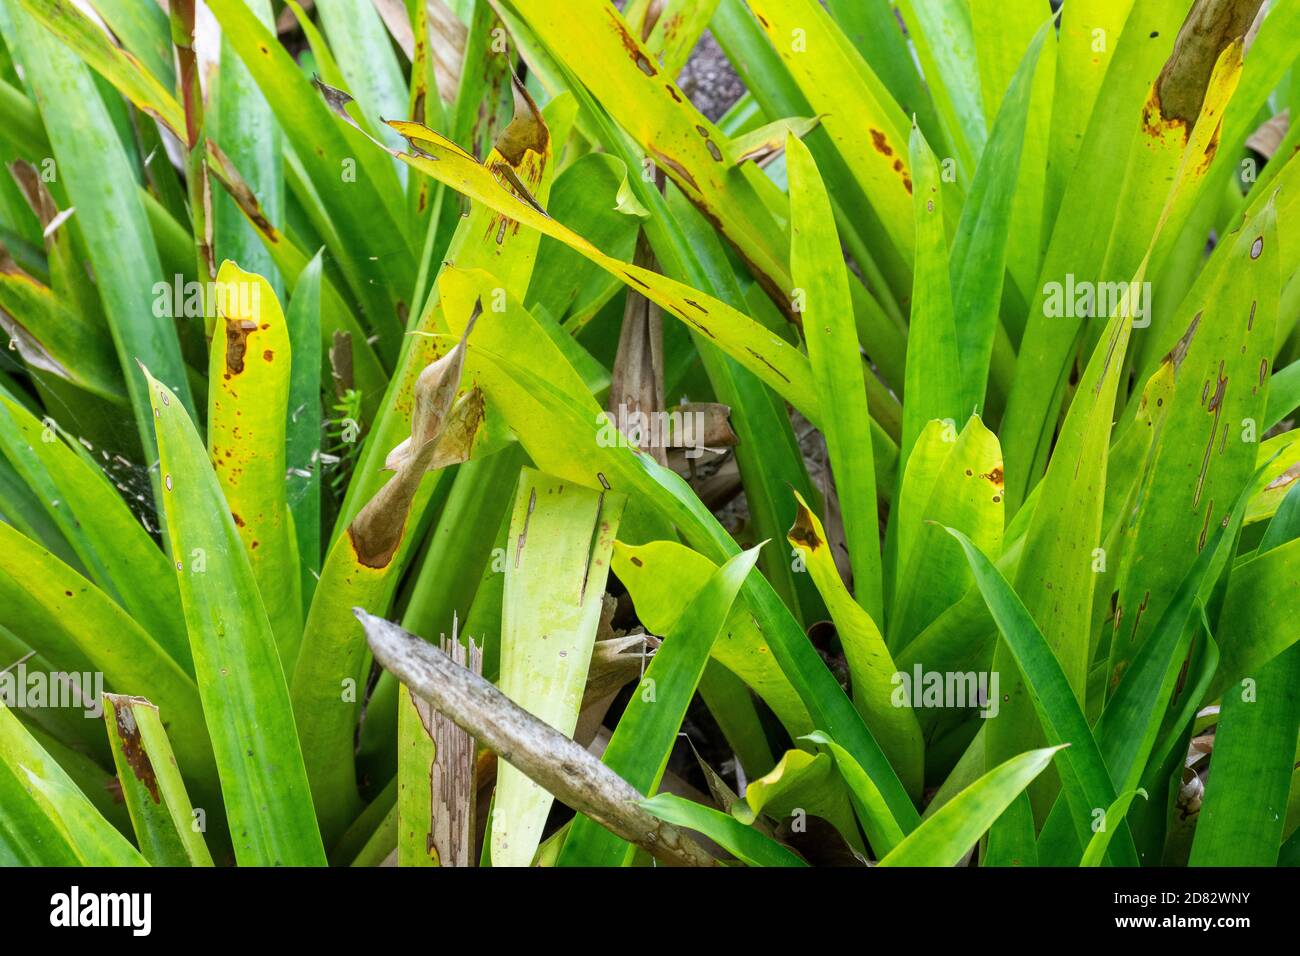 Beautiful detail of green bromeliad plants in the rainforest, in Serrinha Ecological Reserve, Rio de Janeiro, Brazil Stock Photo